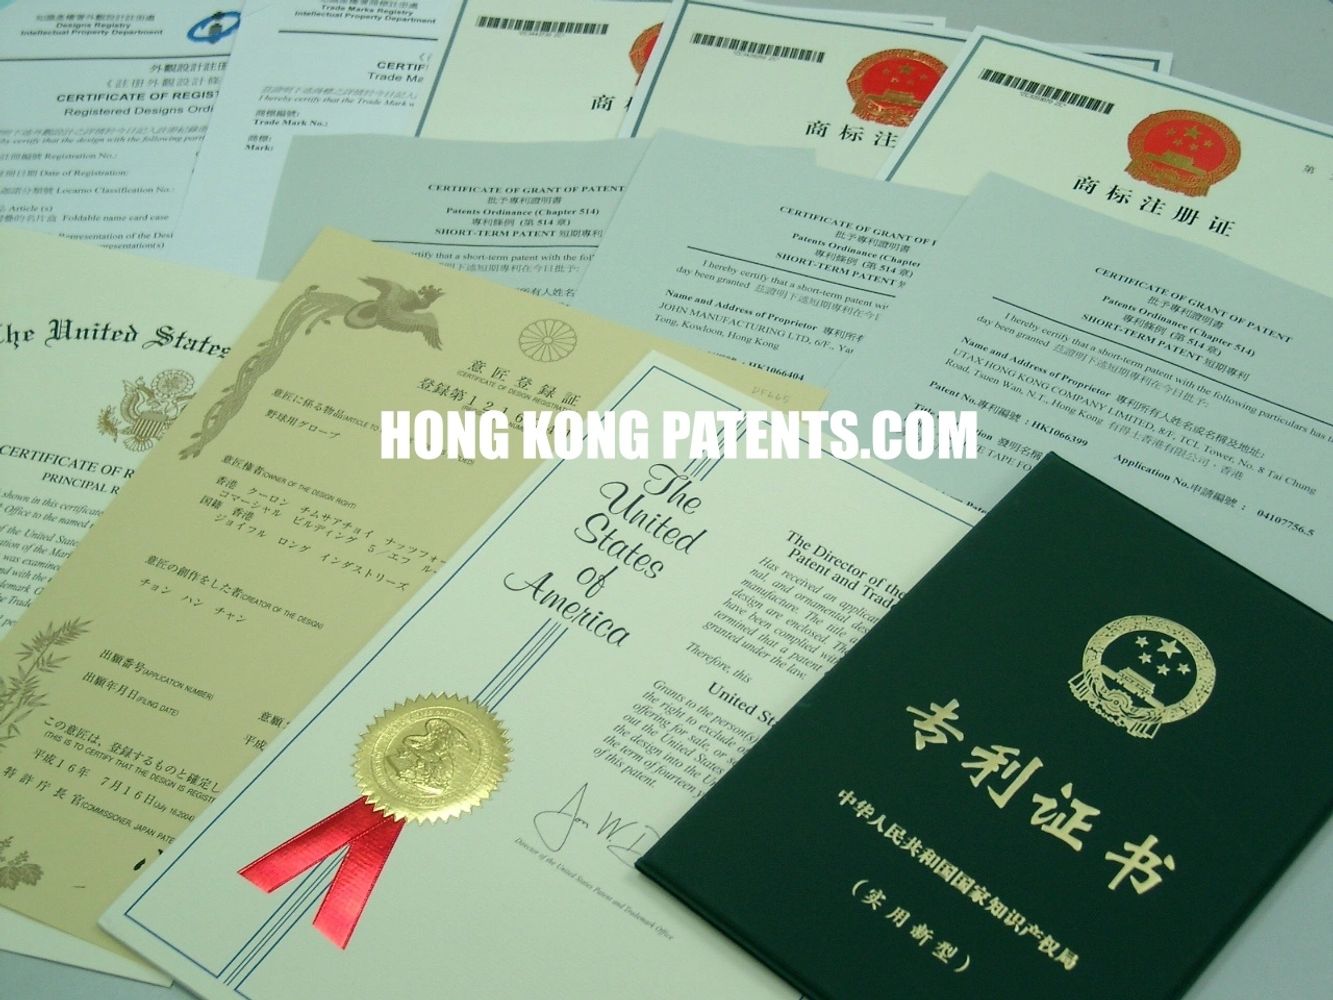 Patent & Trademark Certifcates